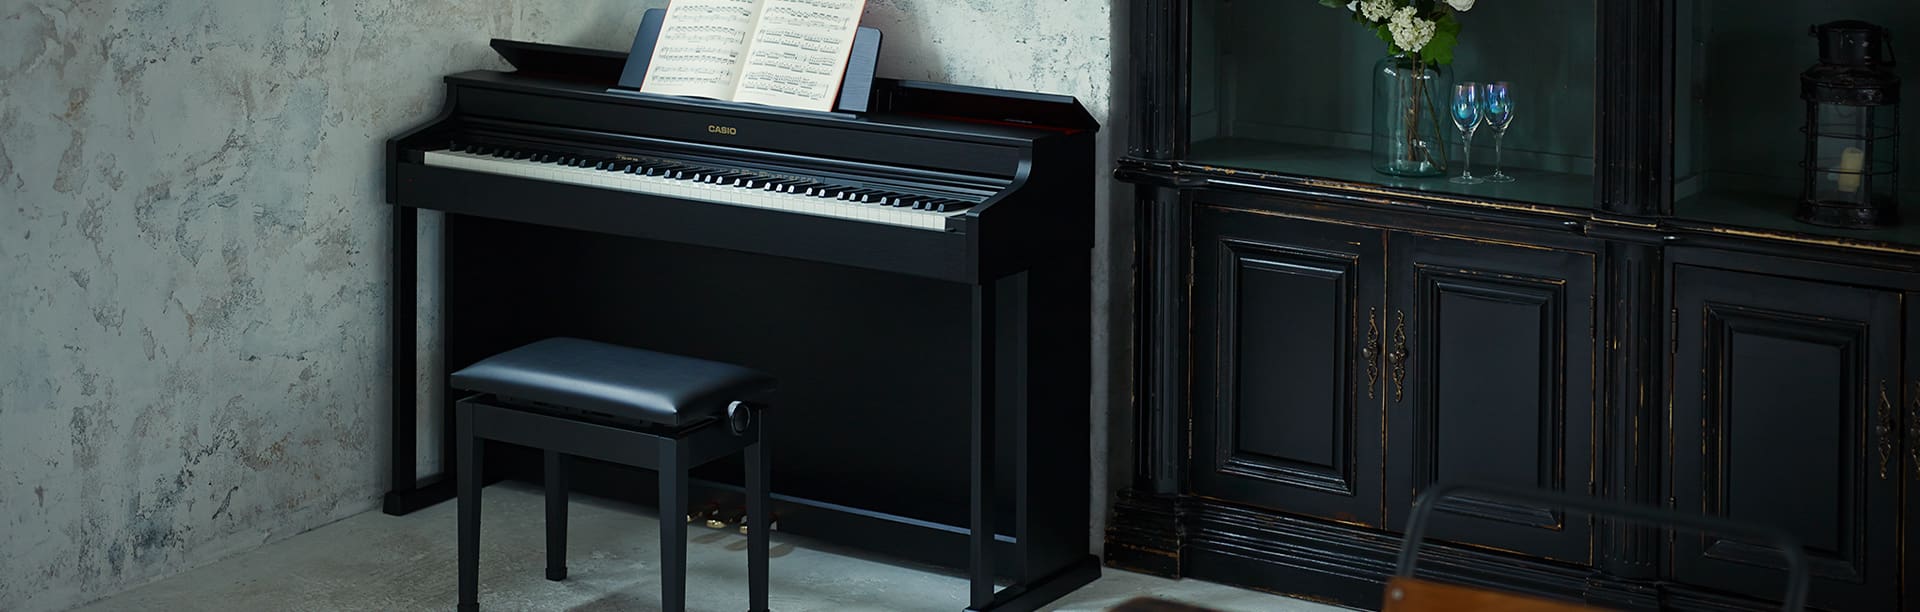 Celviano AP-470 digital piano in corner of room next to wooden cabinet 3